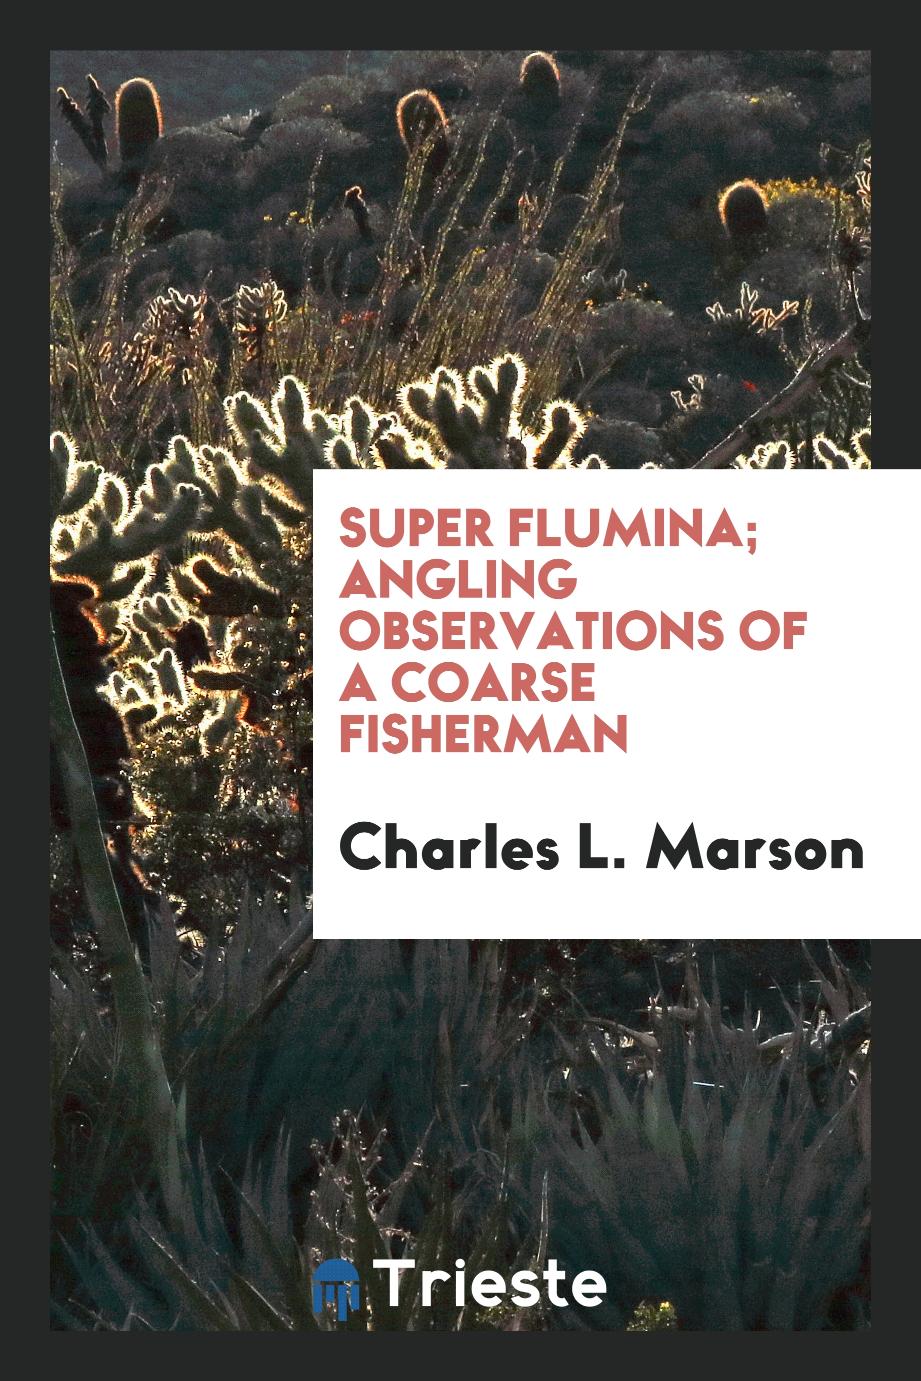 Super flumina; angling observations of a coarse fisherman